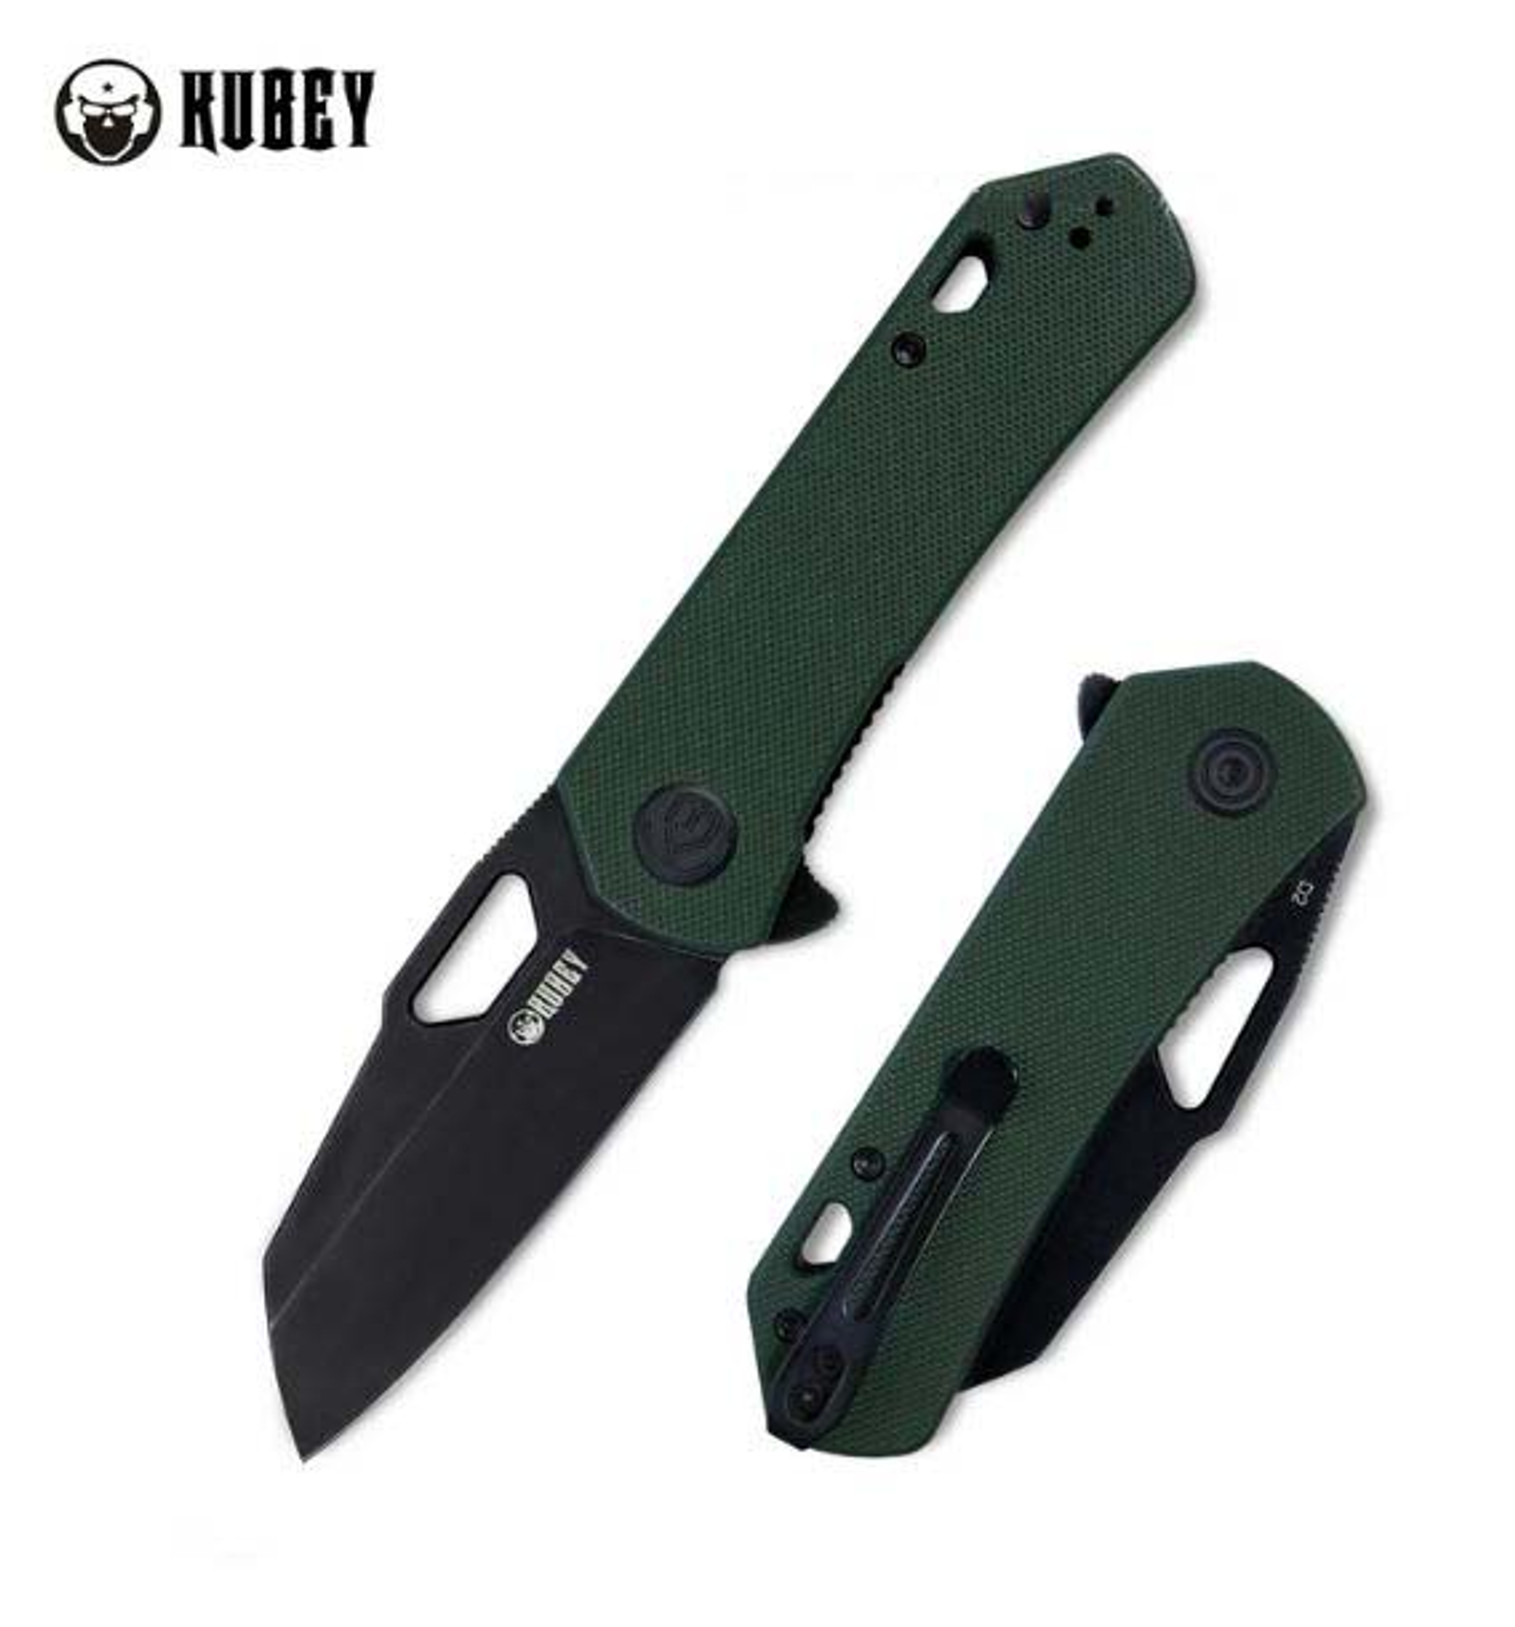 Kubey Flipper Folding Knife, D2 Black SW, G10 OD Green, KU332D